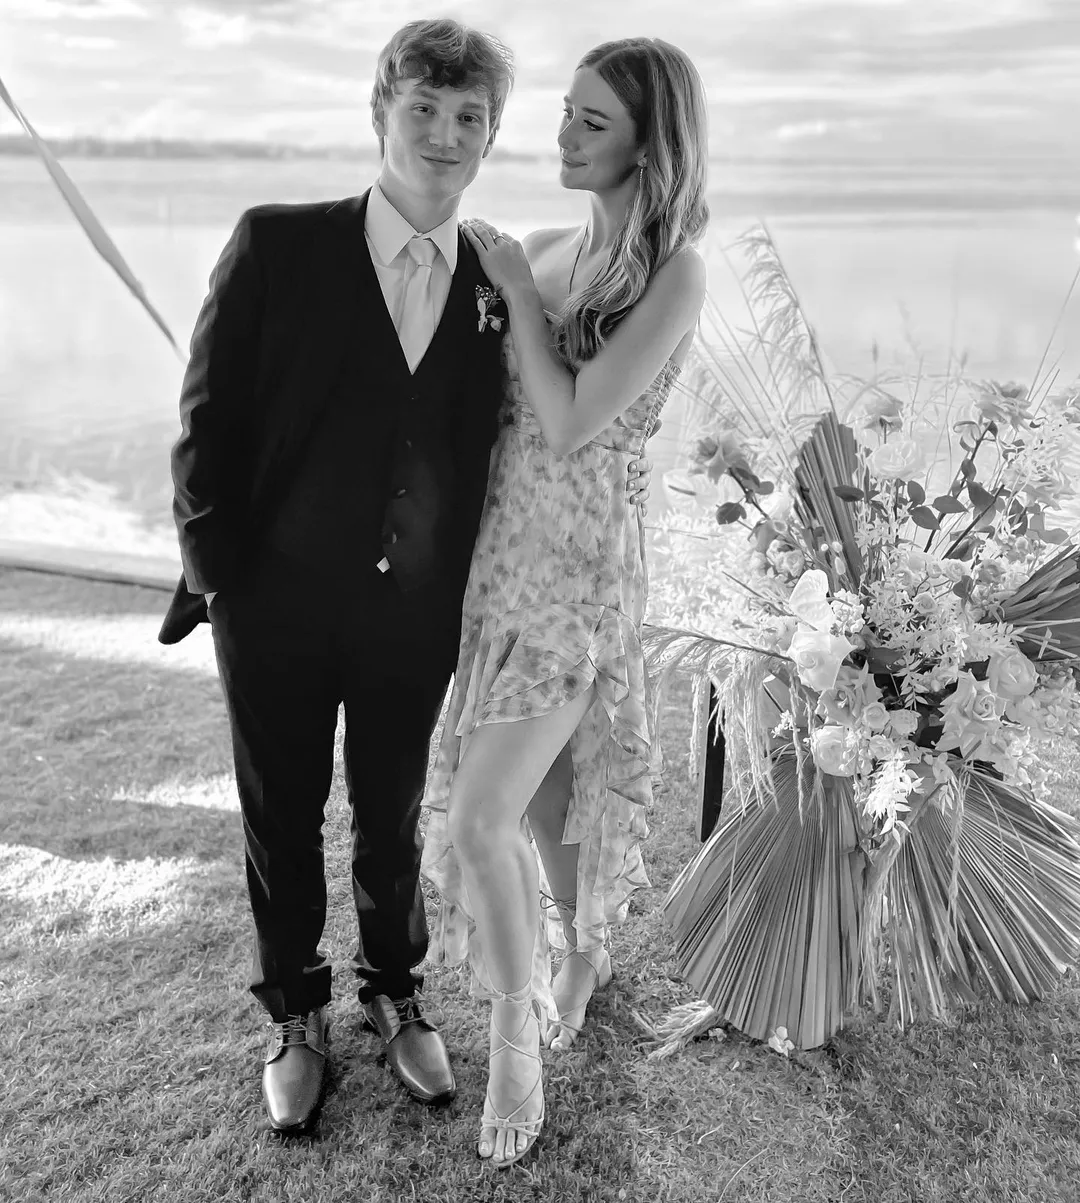 Matt Lintz with his girlfriend Gracie Sapp at his older sister's wedding